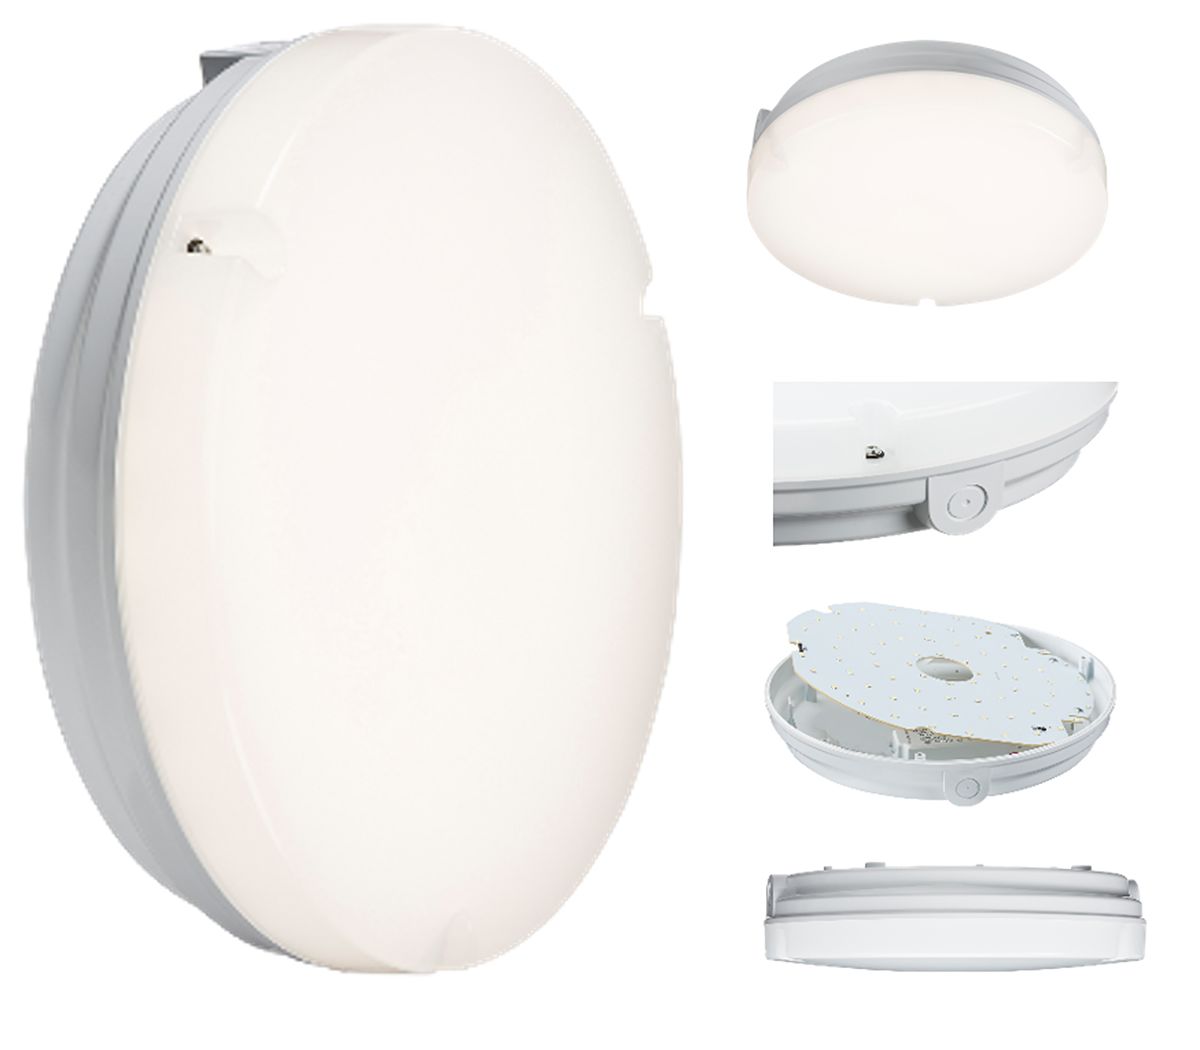 Knightsbridge Round LED Bulkhead Light, 14 W, 230 V ac, Lamp Supplied, IP65